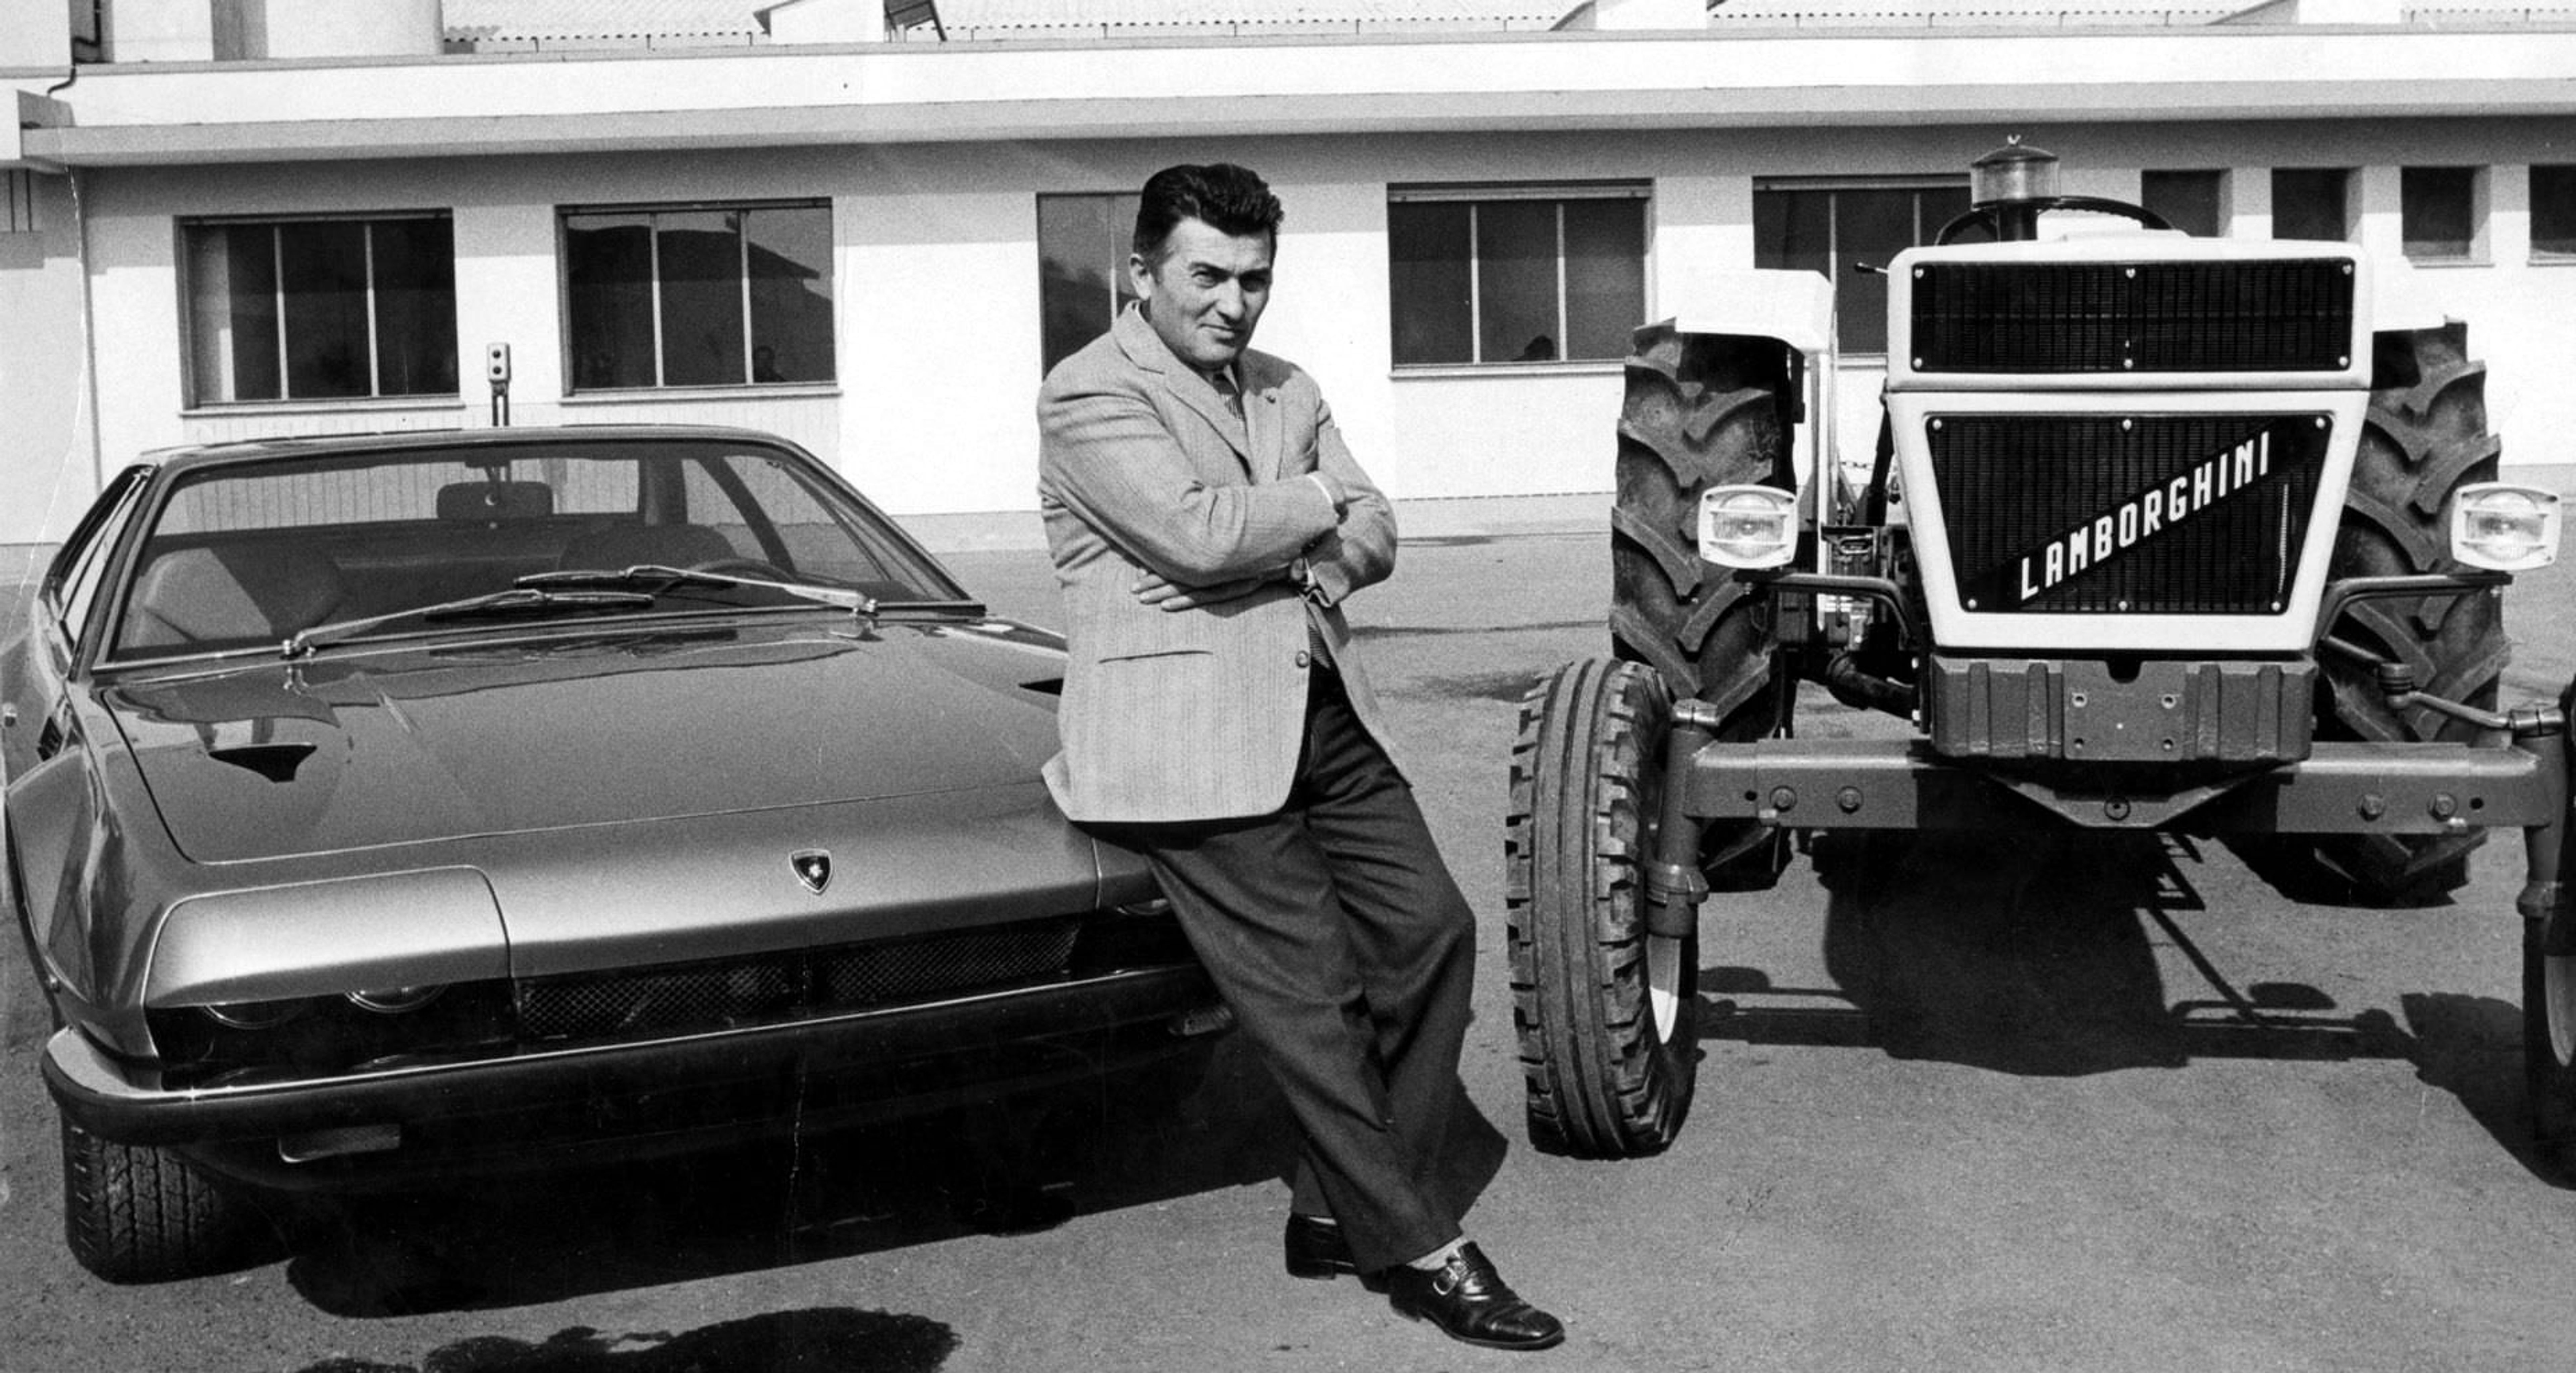 Lamborghini: The man behind the legend